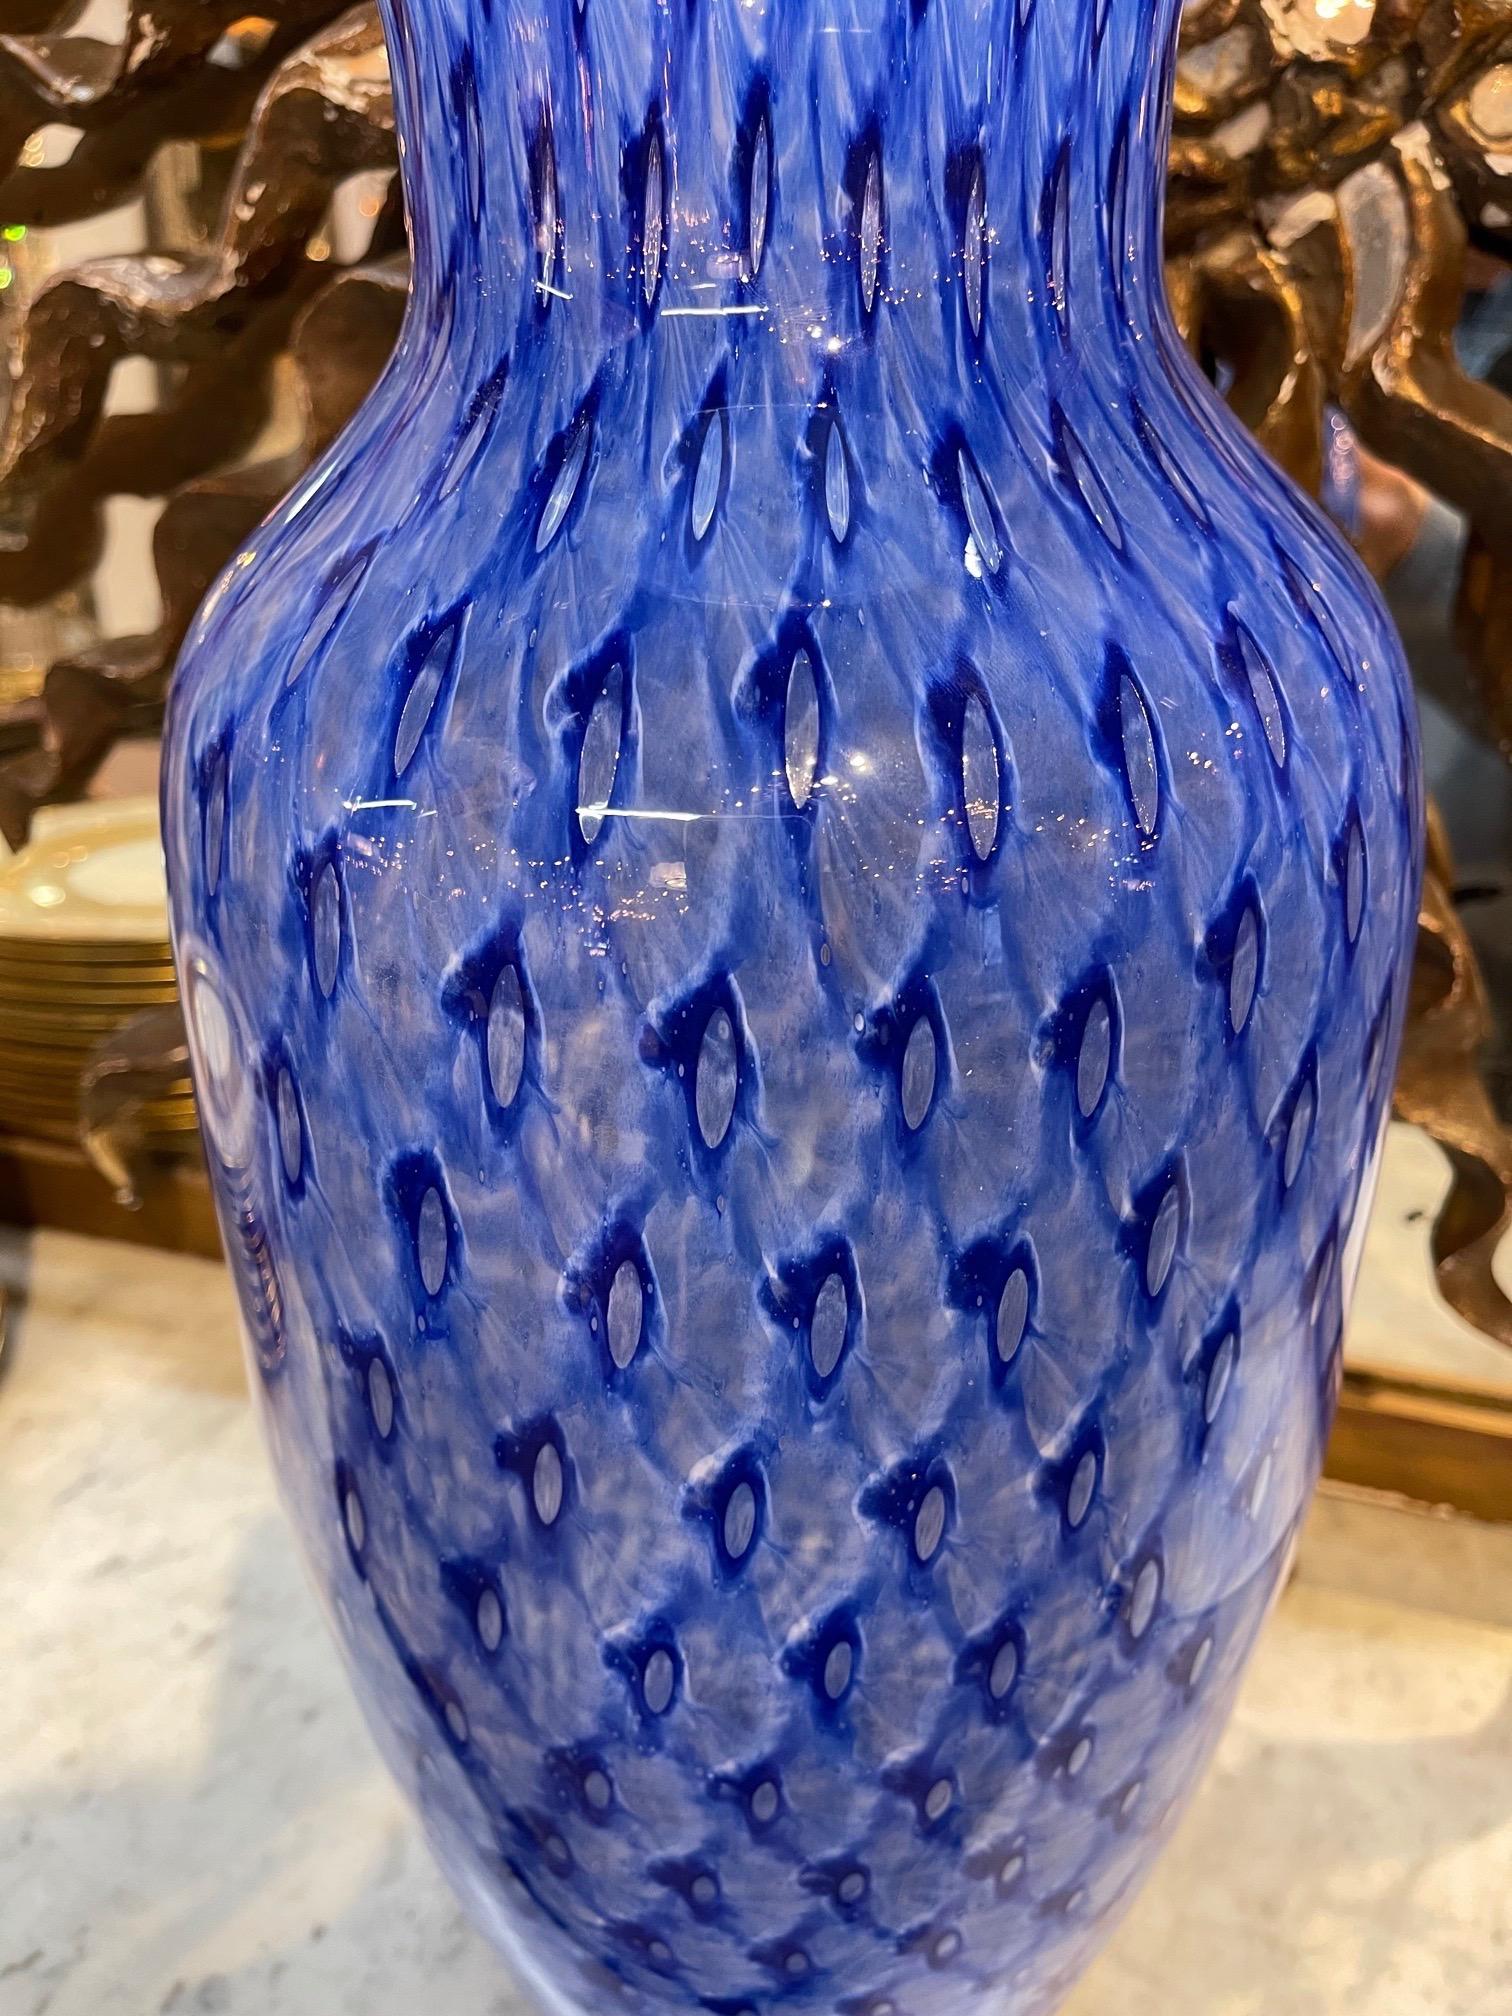 Exquisite vintage large scale blue Murano glass vase. Beautiful decorative pattern. A fabulous accessory!